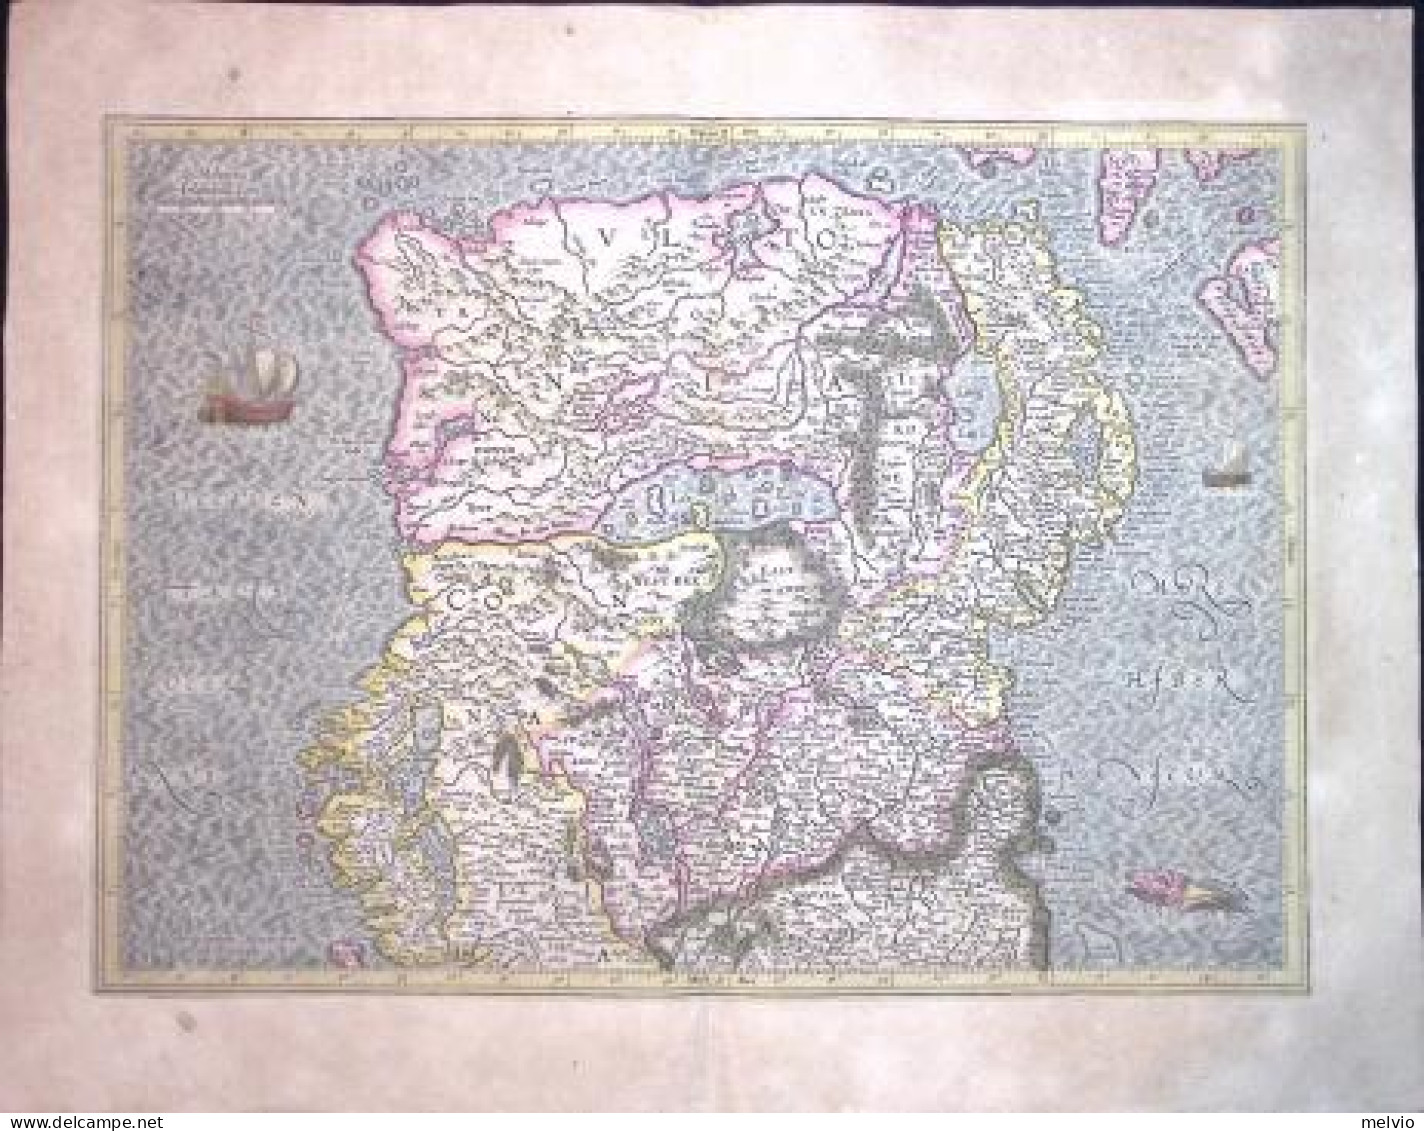 1630-Irlanda Ioannes Janssonius - Hiberniae II Tabula In Qua Ultonia,Connacia,Me - Geographical Maps